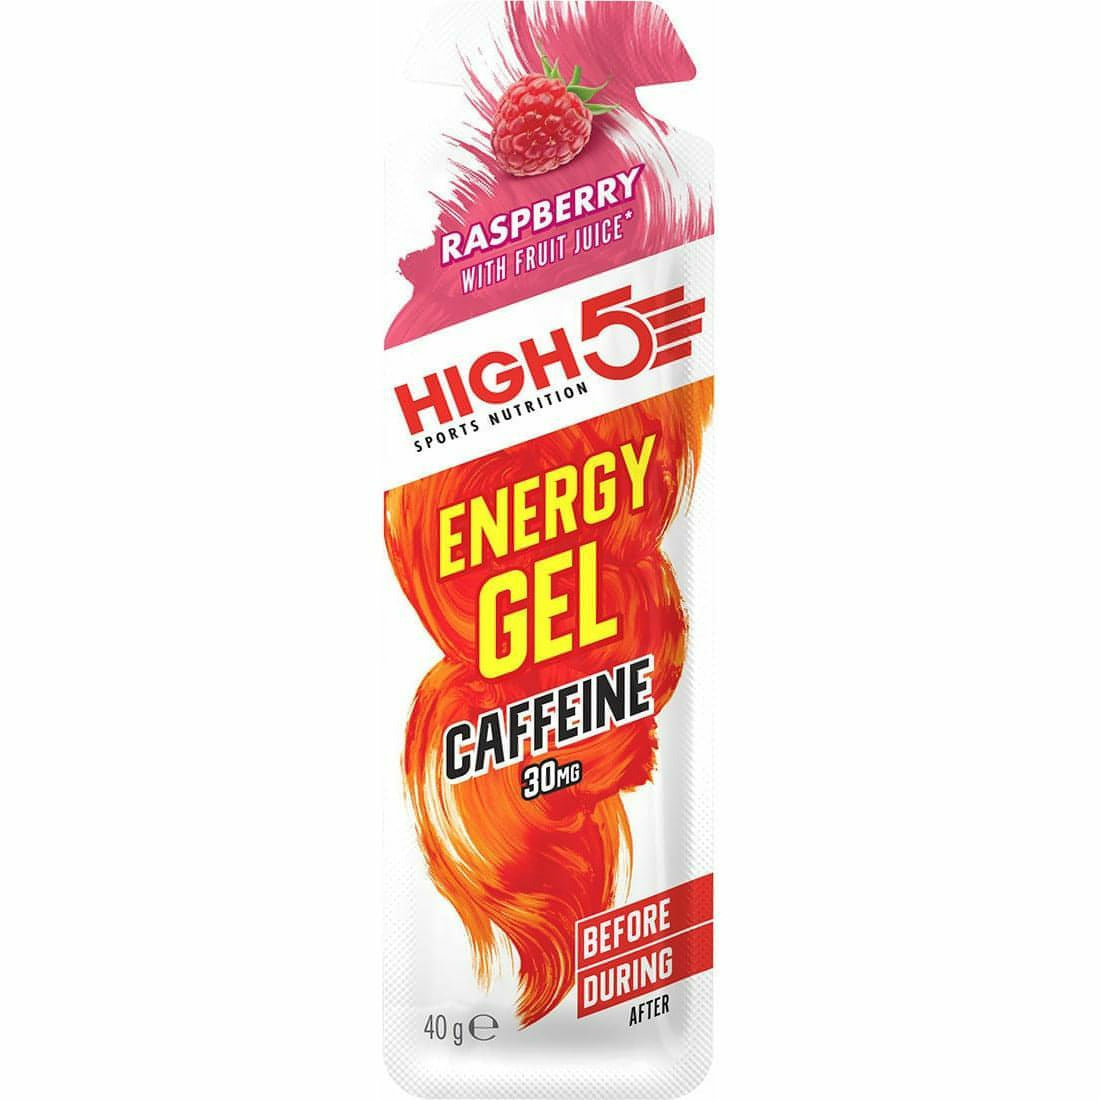 High 5 Sports Nutrition Caffeine Raspberry Flavoured Energy Gel 40g RRP £1.20 CLEARANCE XL 99p